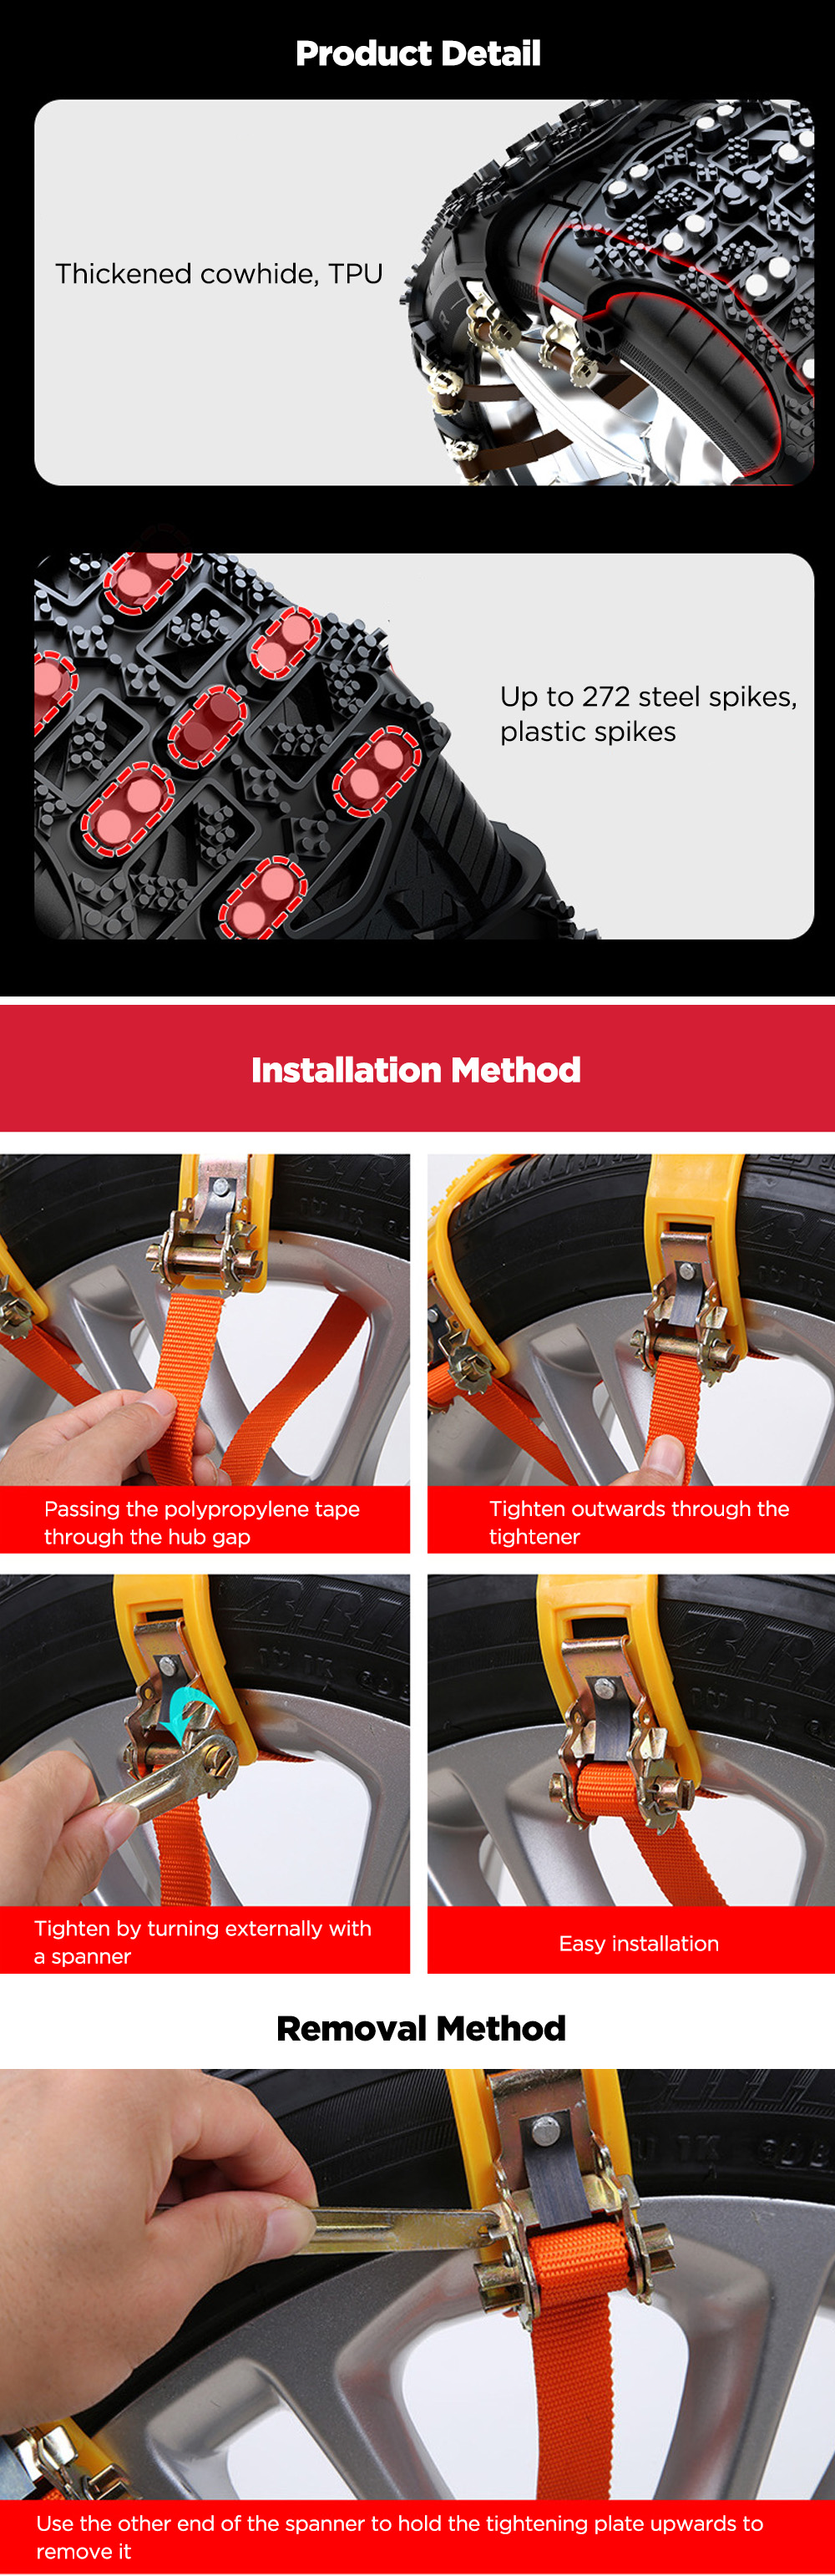 Upgraded-versionBIKIGHT-6-Pcs-Thicker-TPU-Car-Snow-Chains-Universal-Car-Tyre-Safety-Chains-Anti-Slip-1791313-3